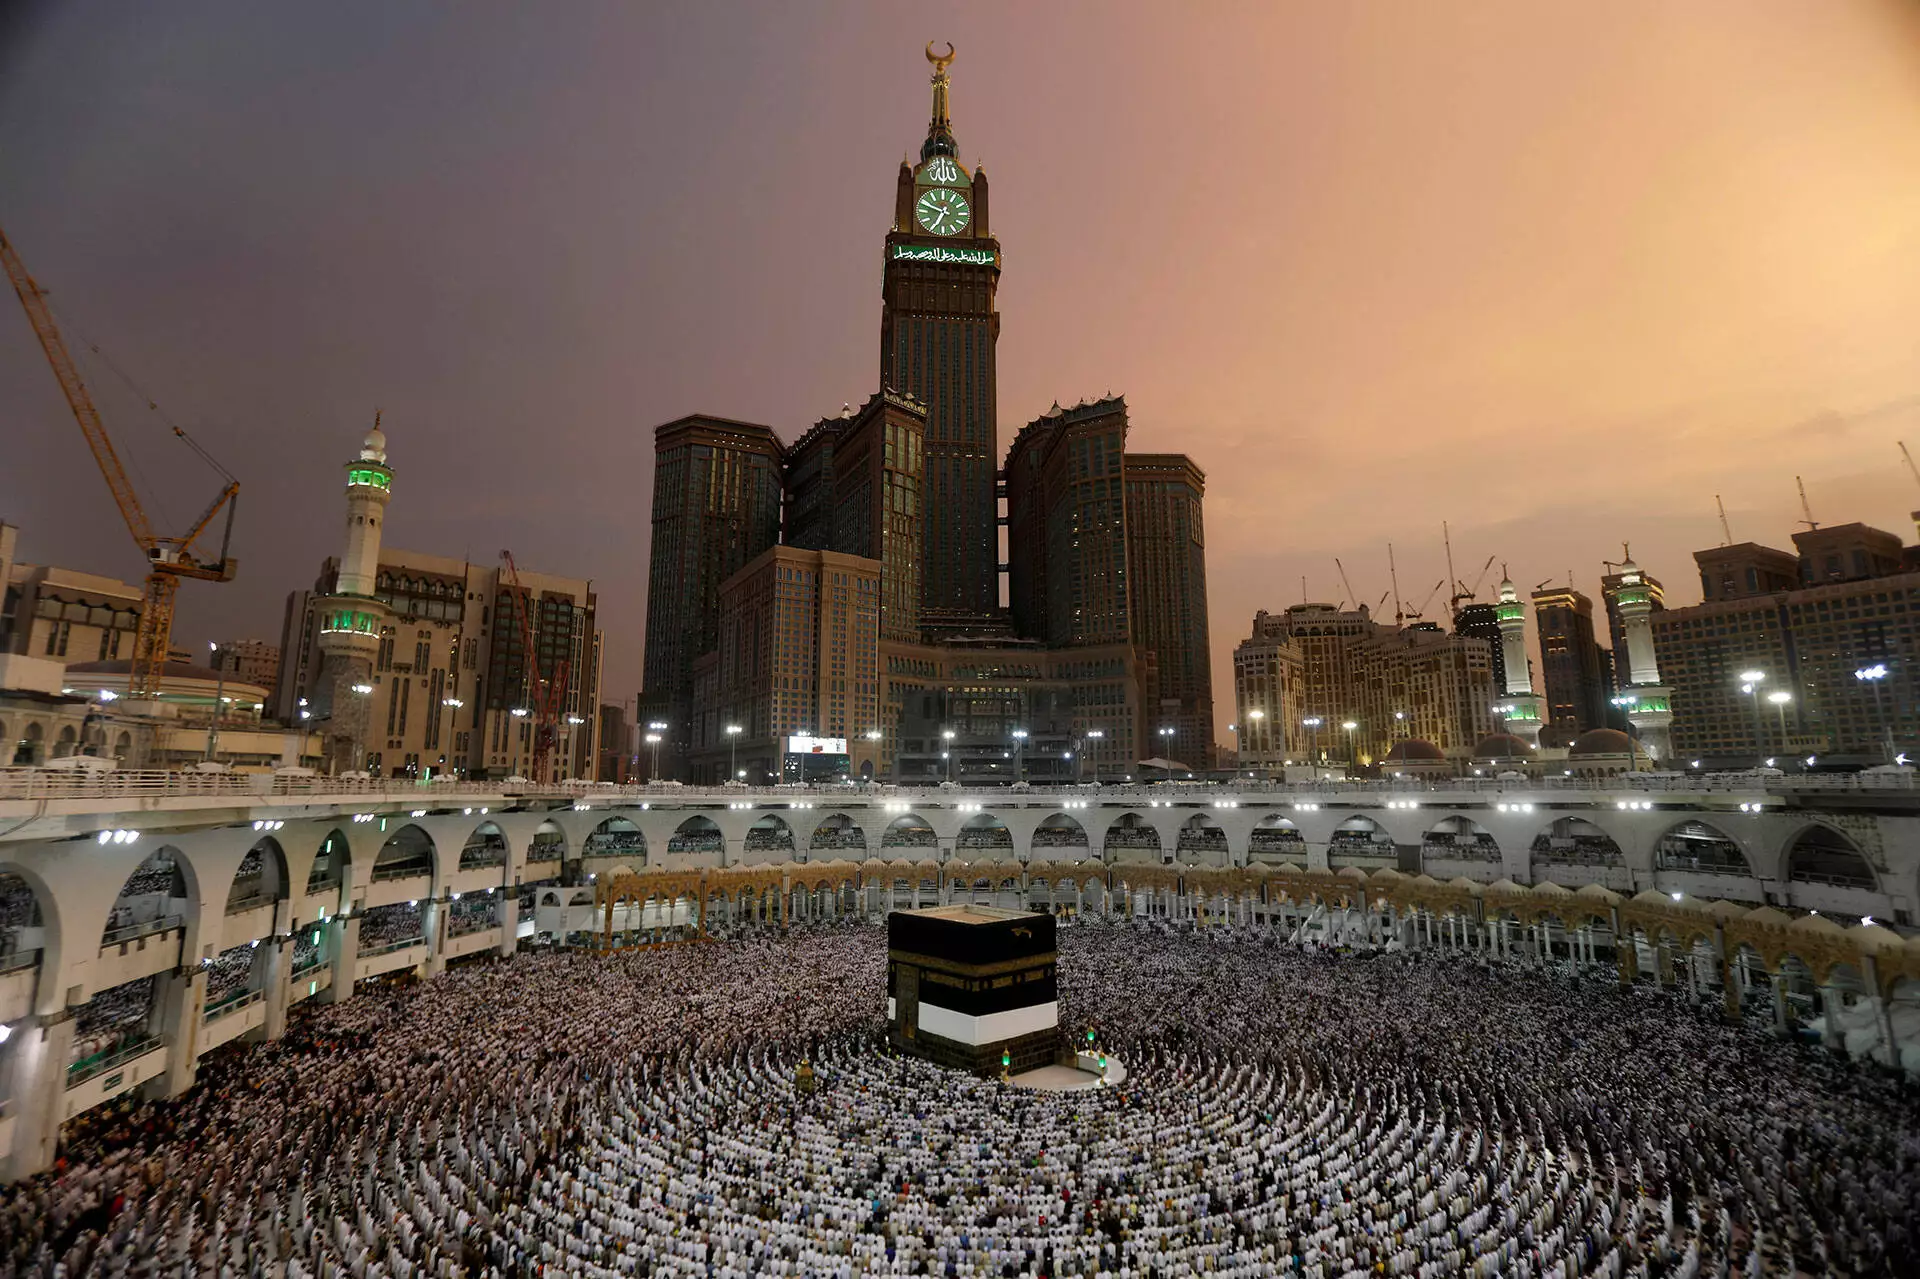 Mecca Saudi Arabia